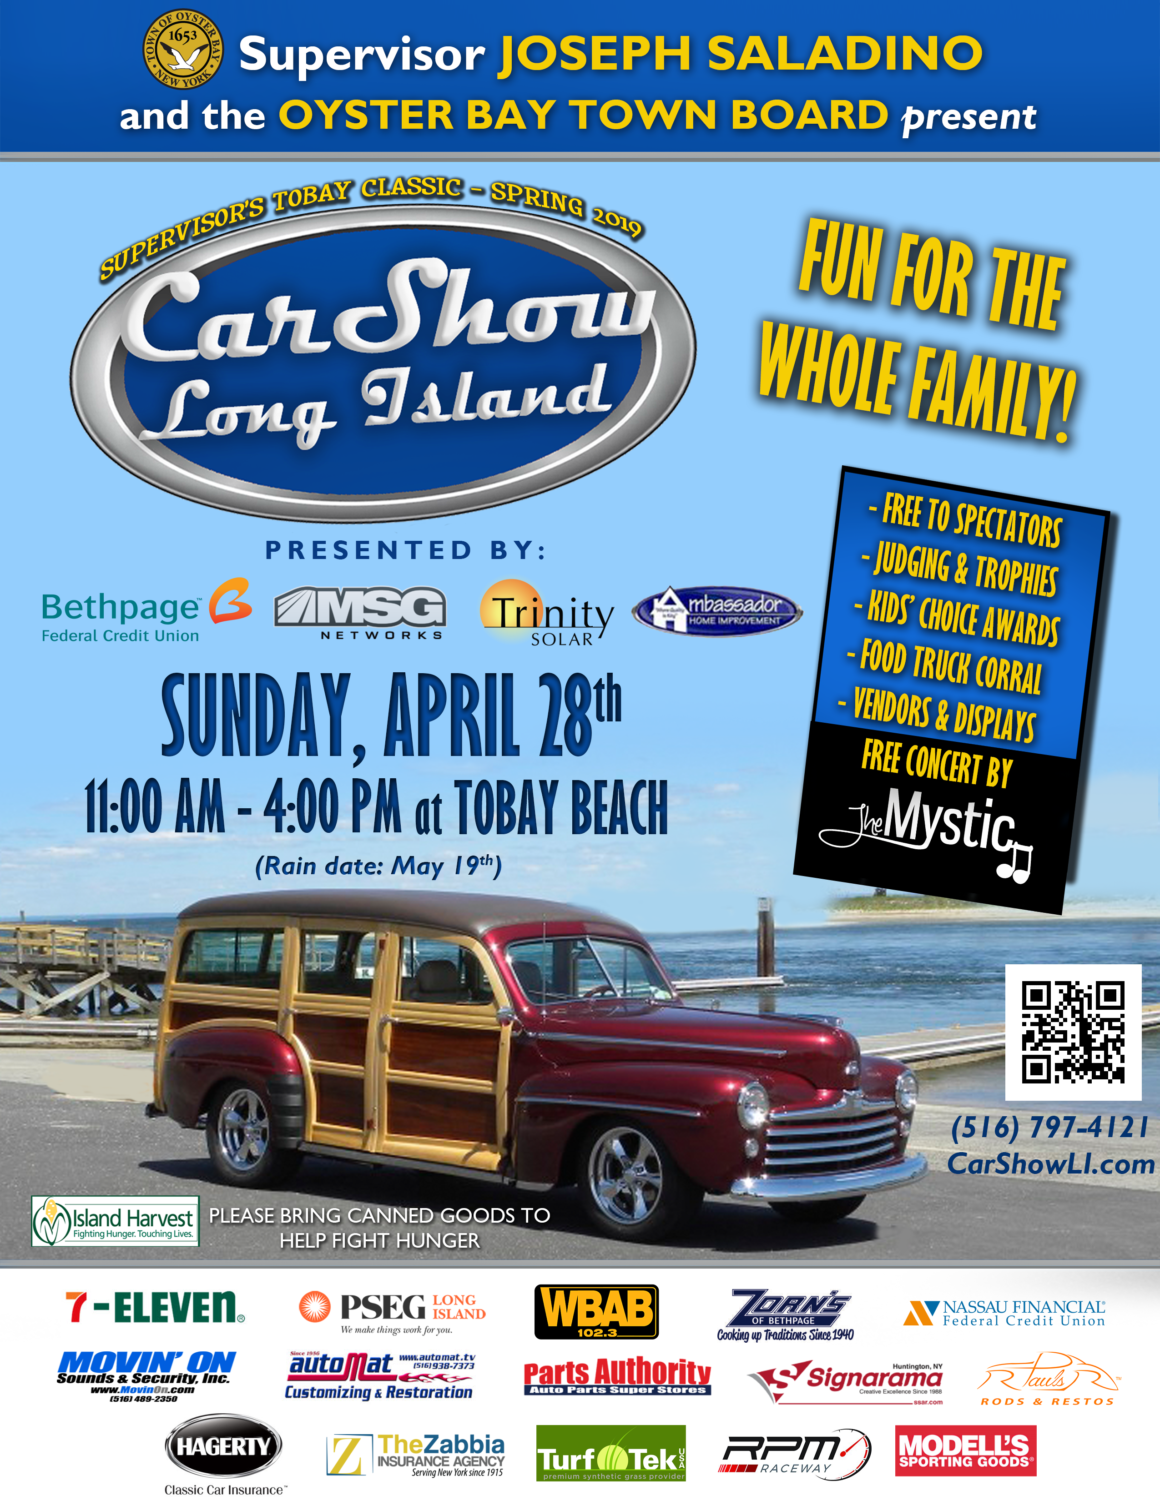 Saladino Announces Car Show Long Island TOBAY Spring Classic on April 28th